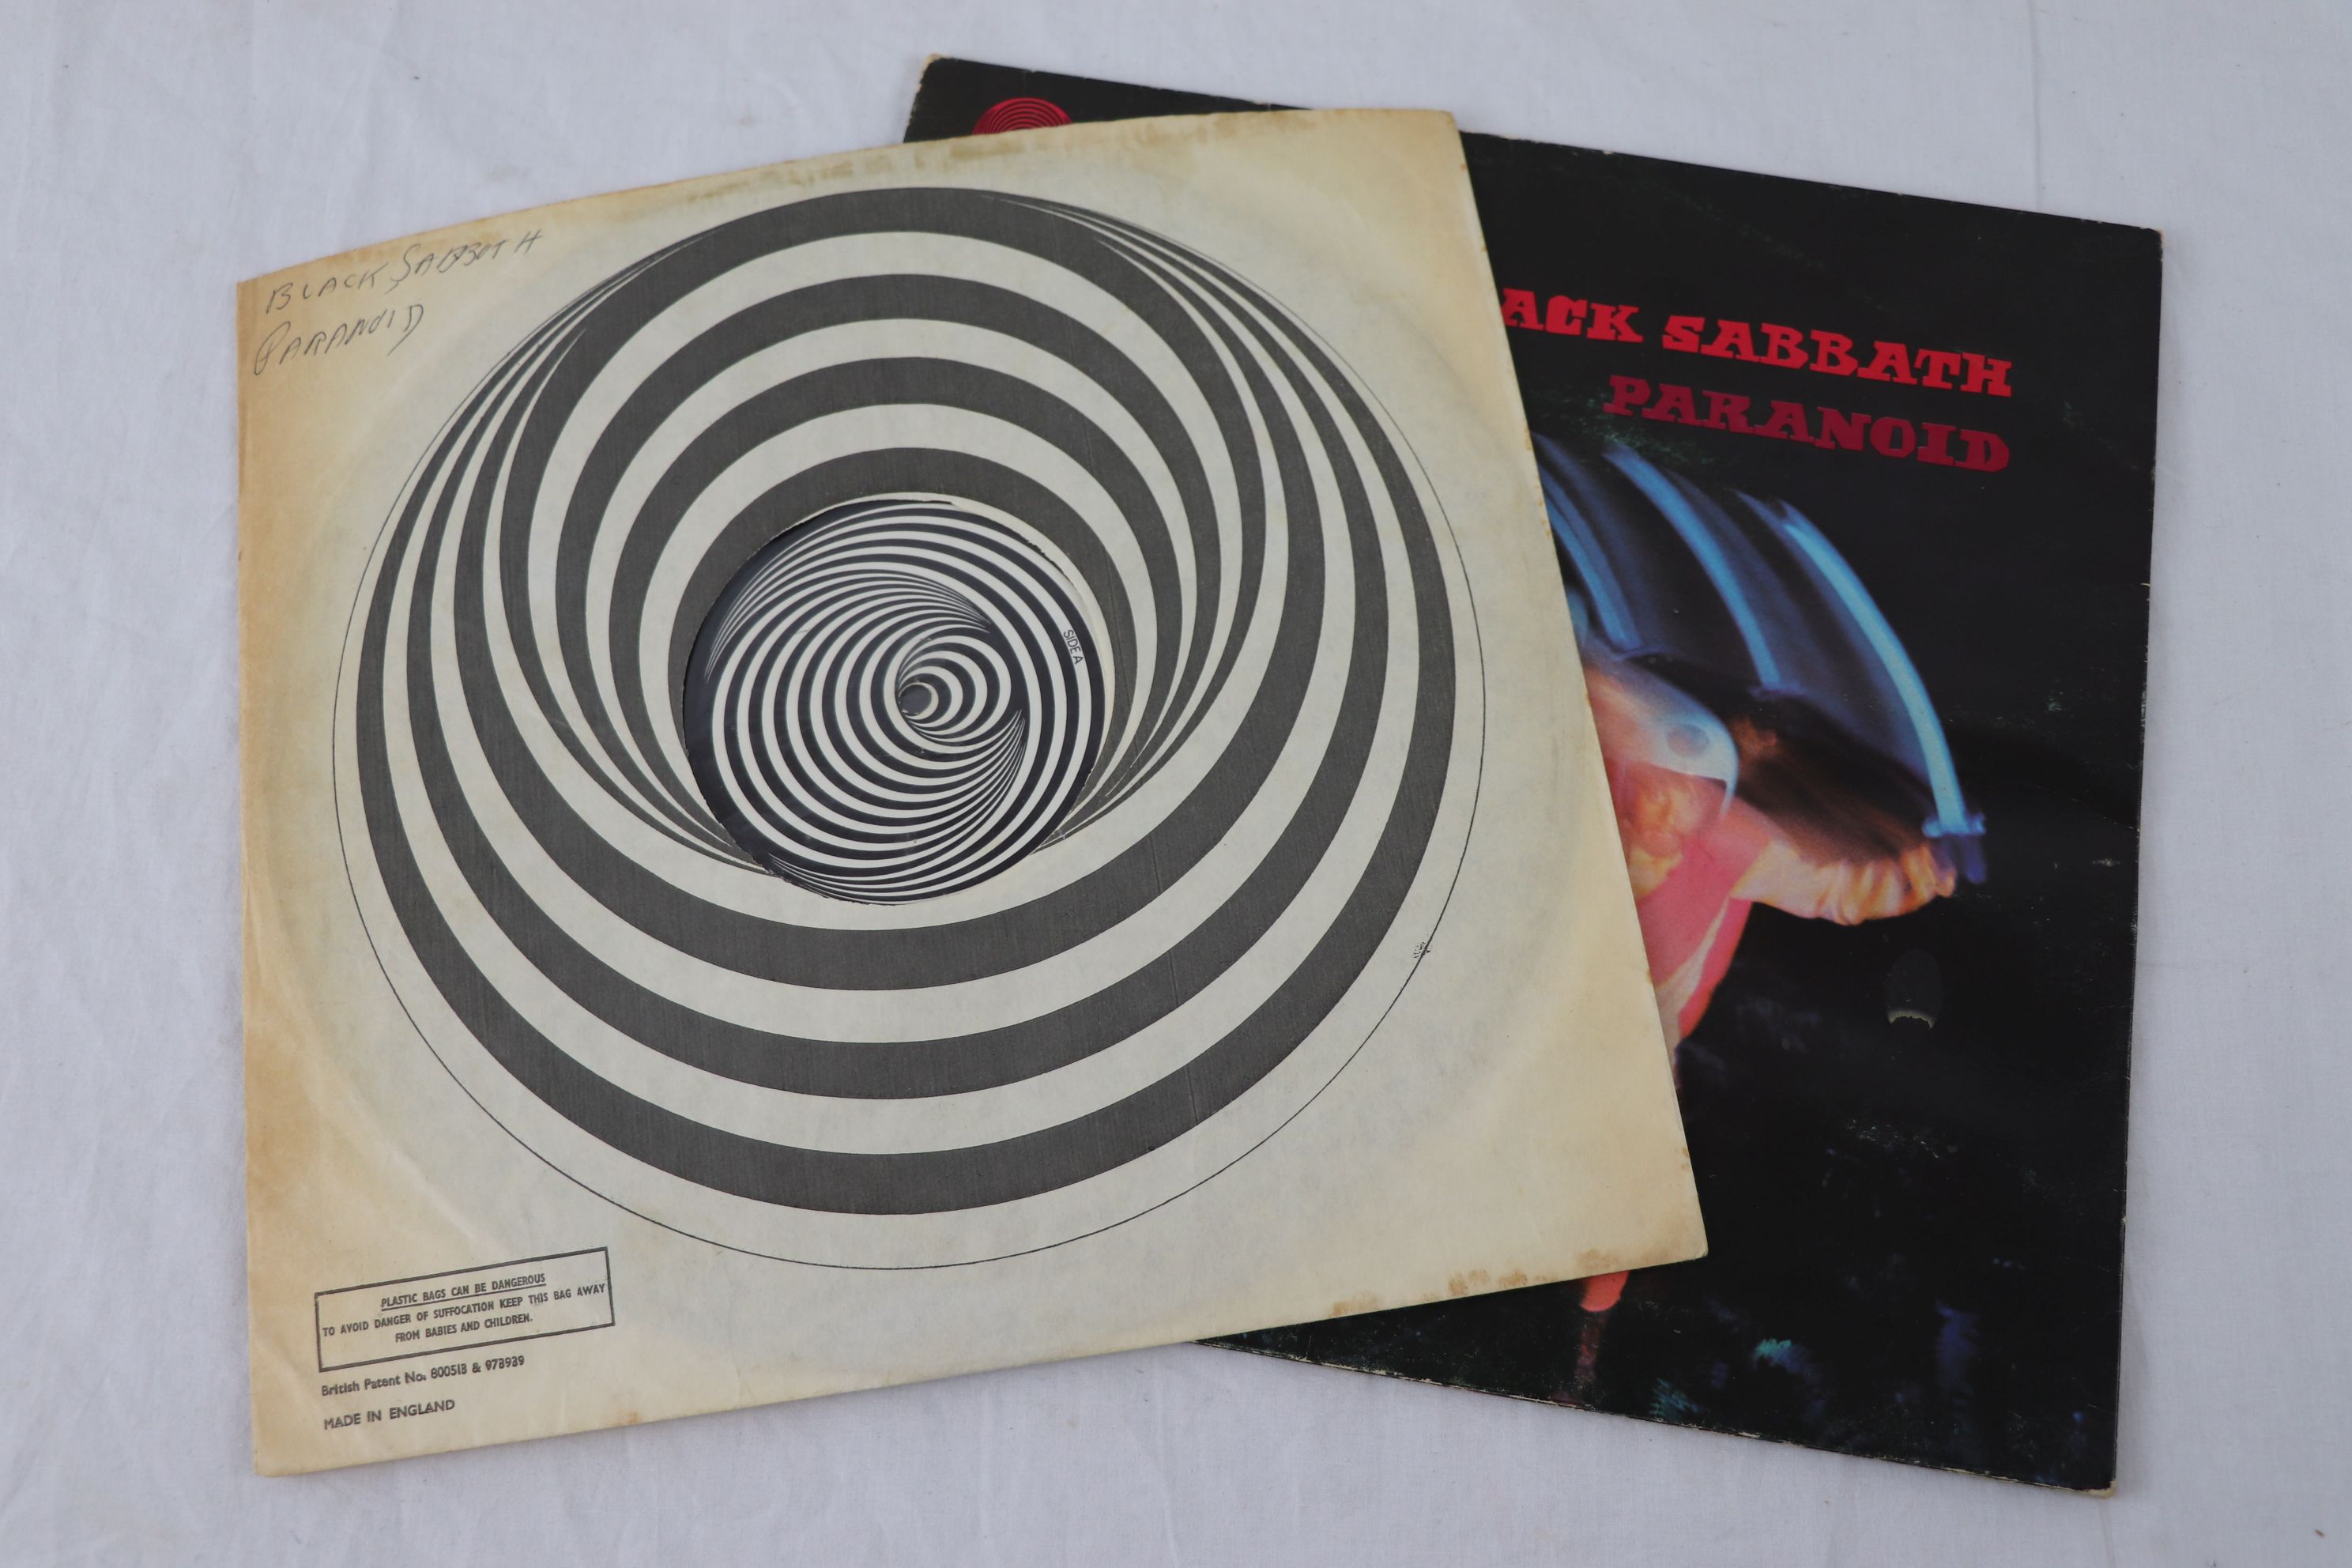 Vinyl - Black Sabbath Paranoid (6360011) with swirl inner, no Jim Simpson credit, sleeve and vinyl - Image 6 of 11